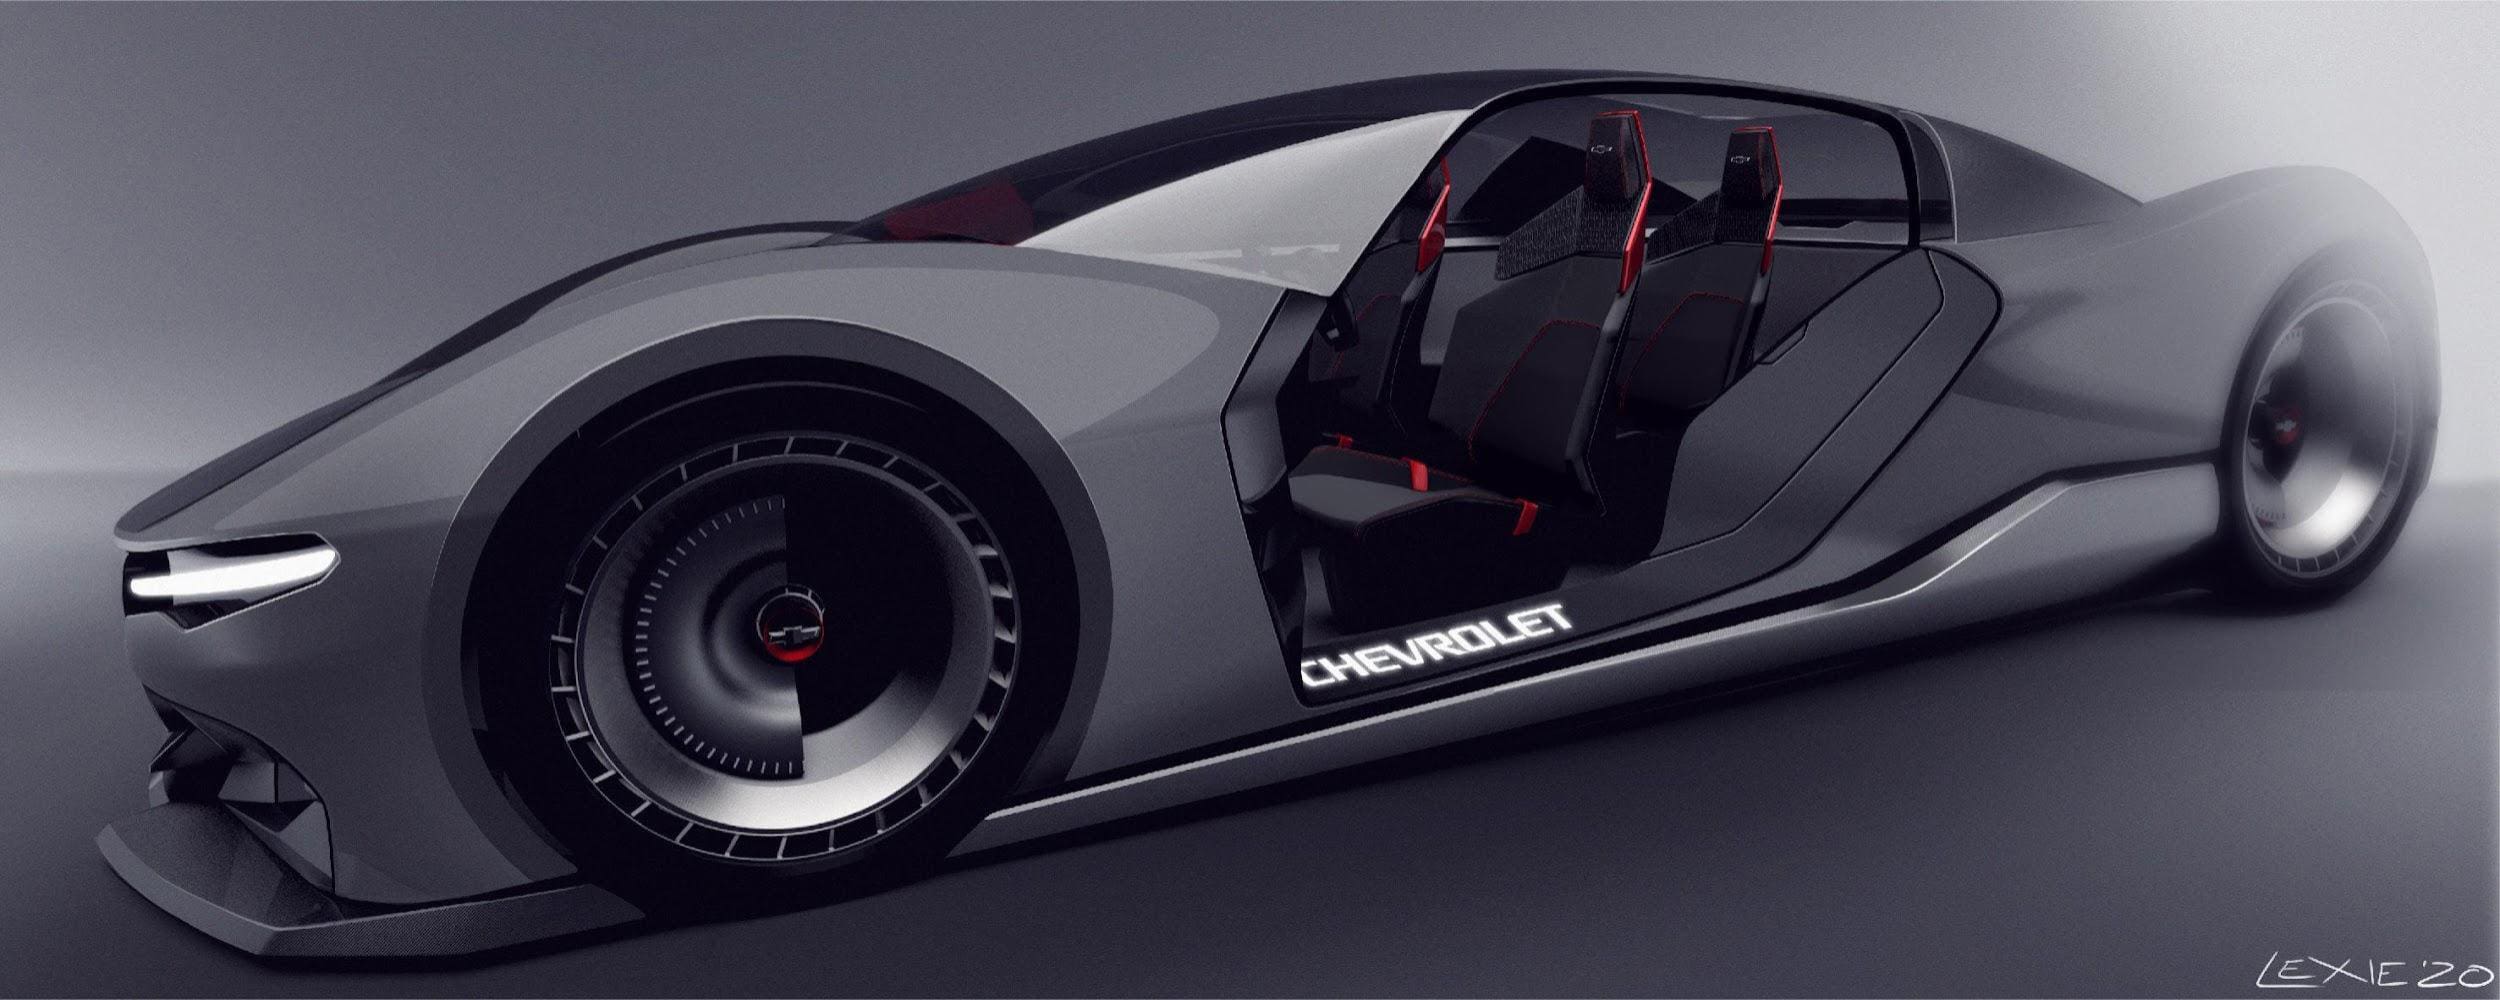 Chevrolet Vehicle Sketch done by designer